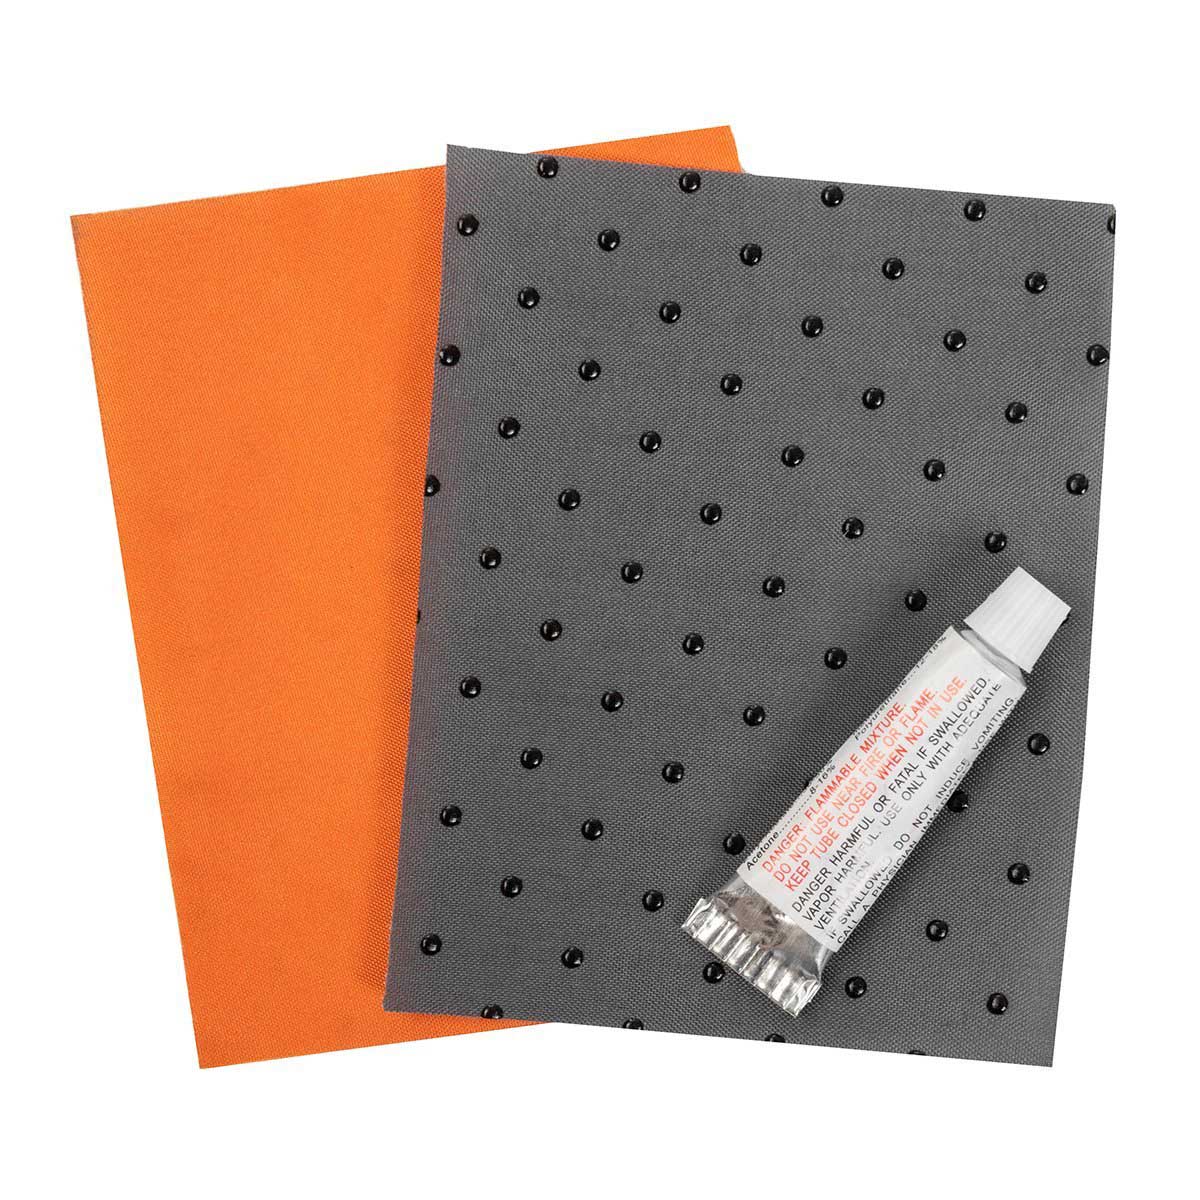 Repair Kit for Orange Self Inflating Sleeping Pad